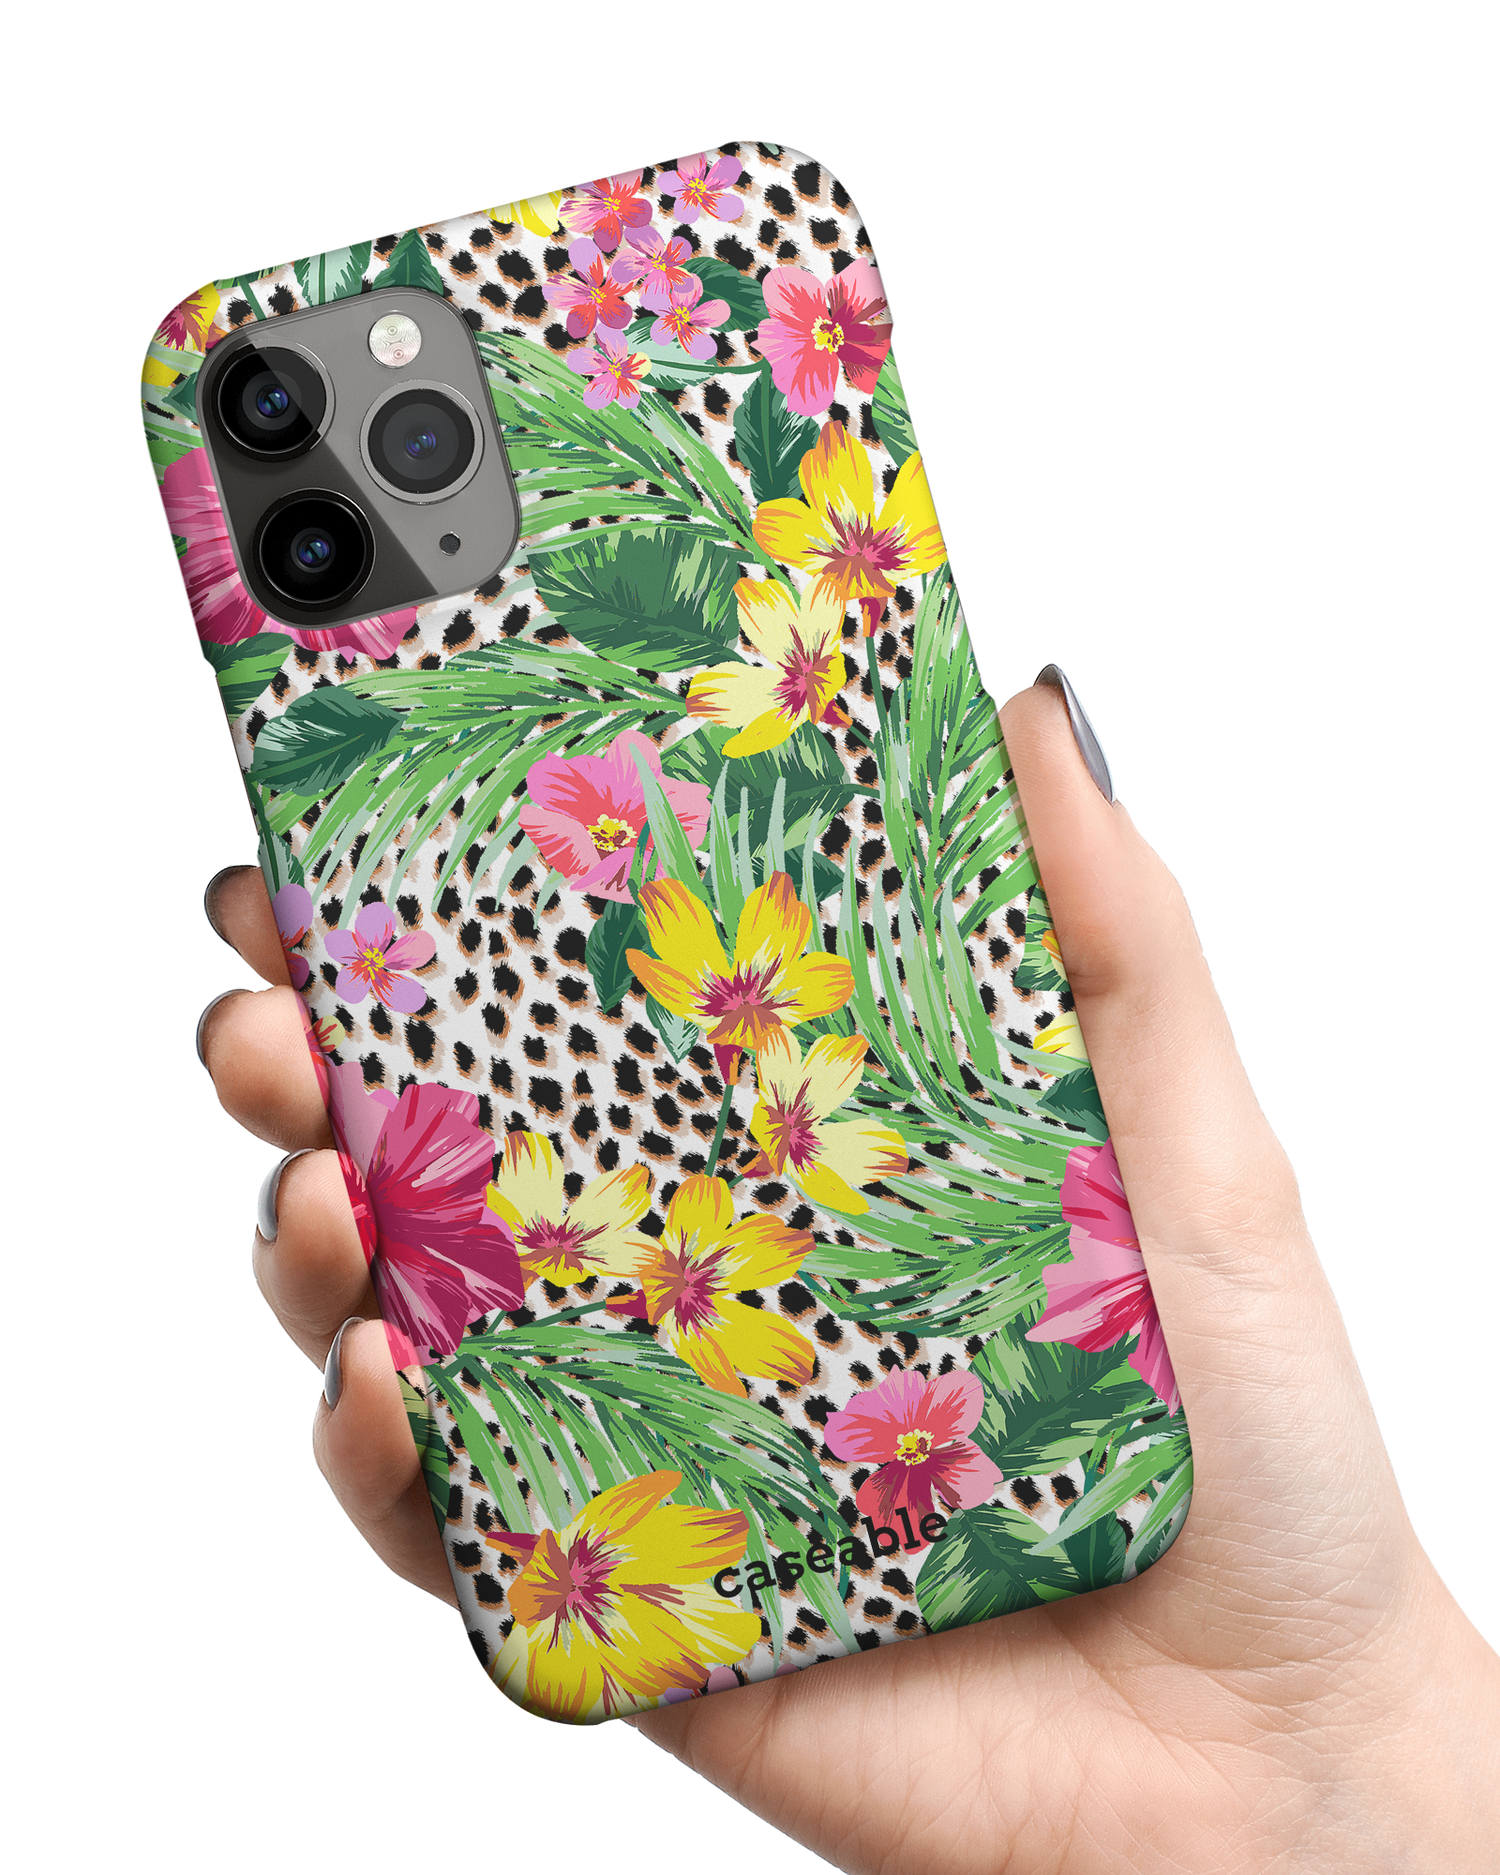 Tropical Cheetah Hardcase Handyhülle Apple iPhone 11 Pro Max in der Hand gehalten